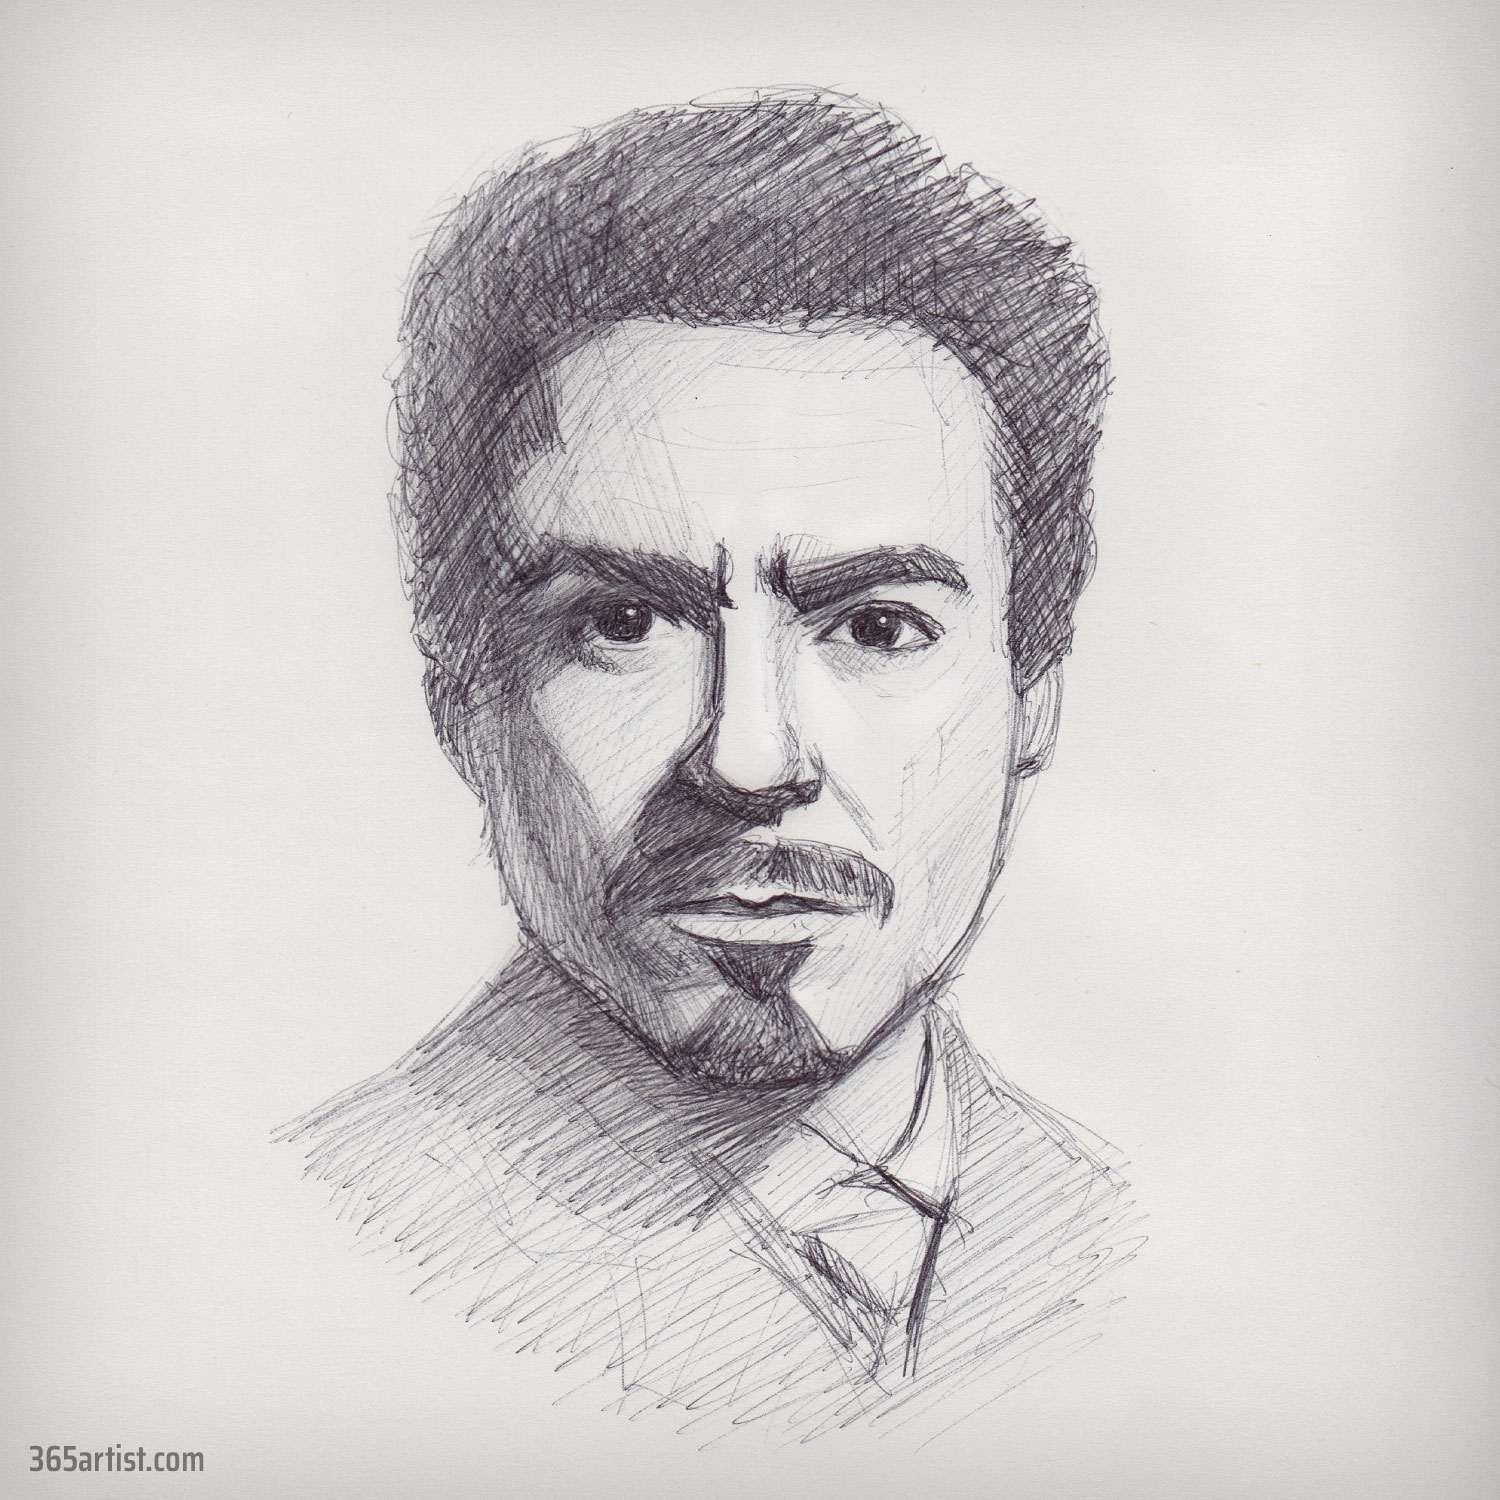 Tony Stark portrait drawing